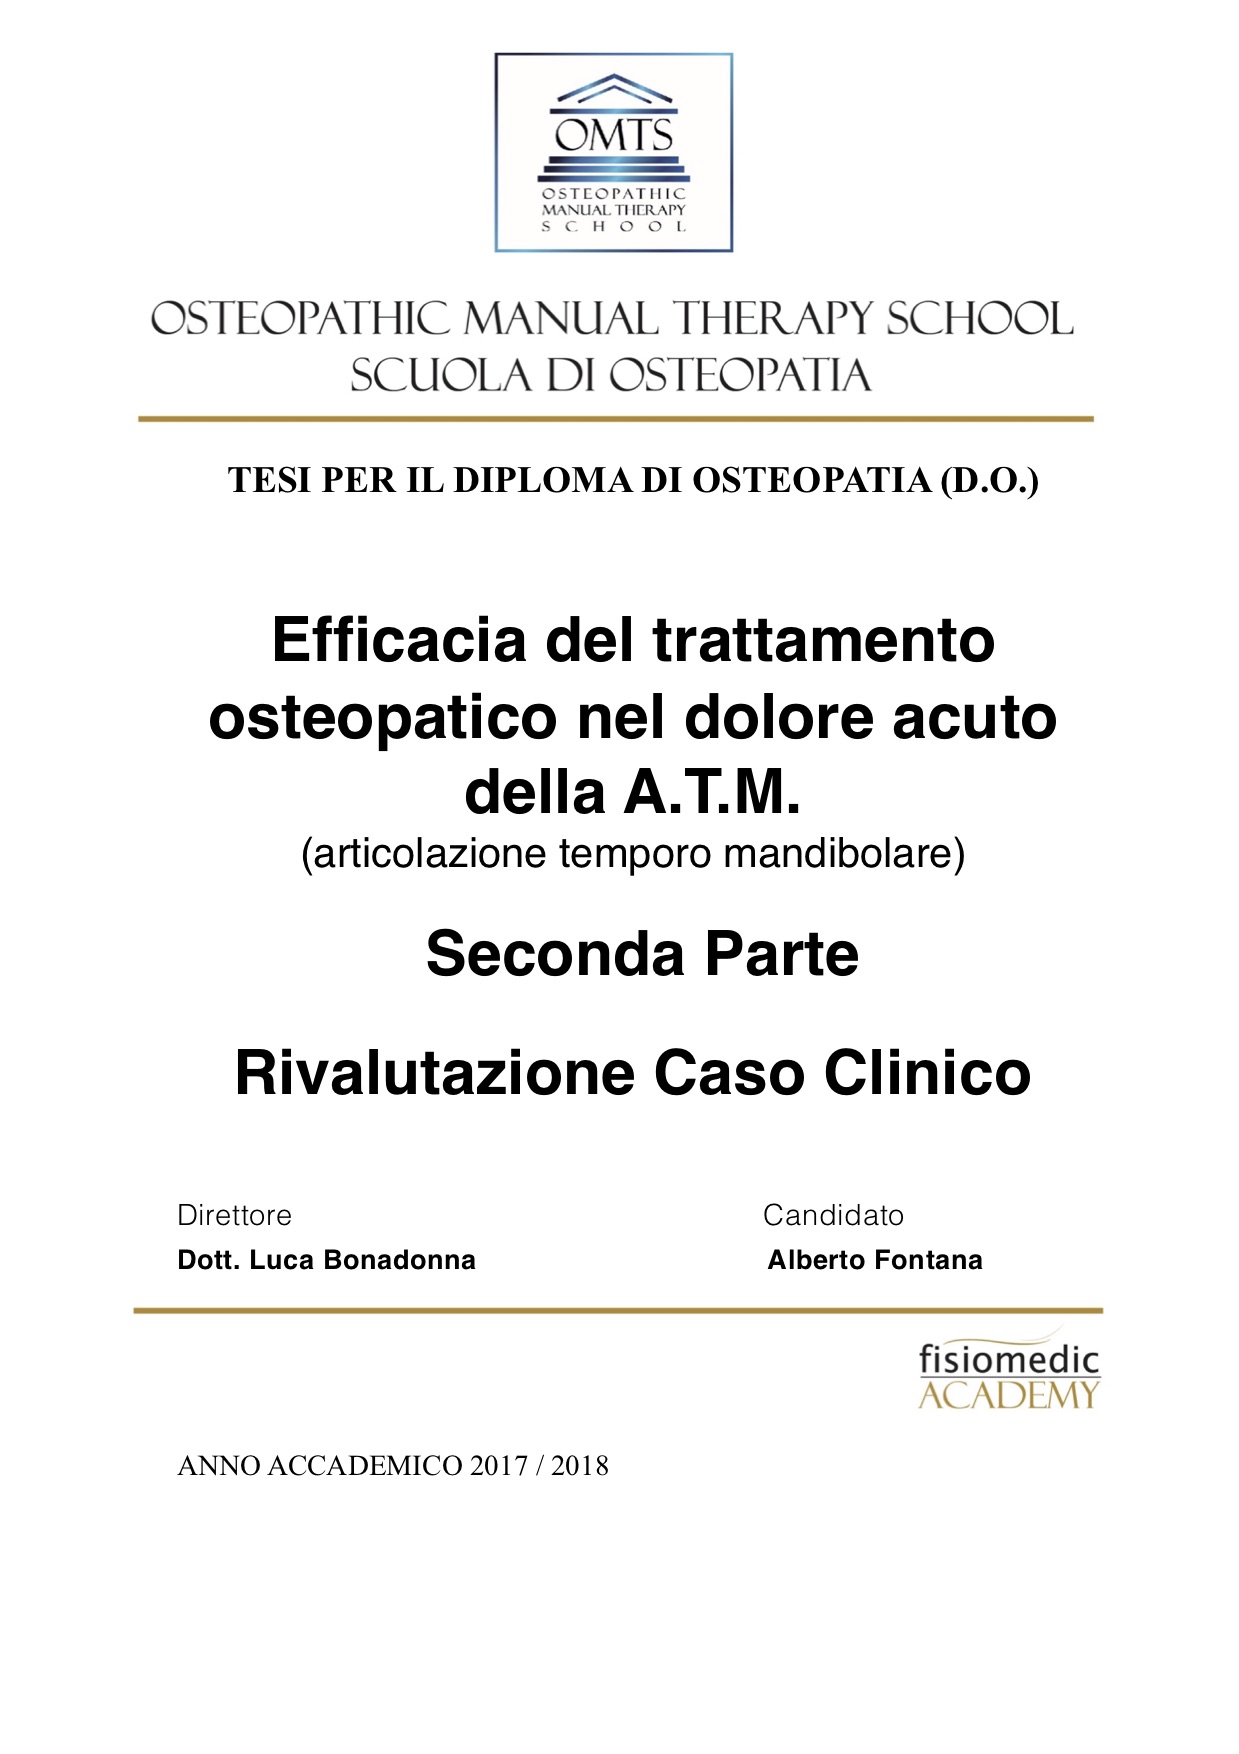 Alberto Fontana Tesi Diploma Osteopatia 2018